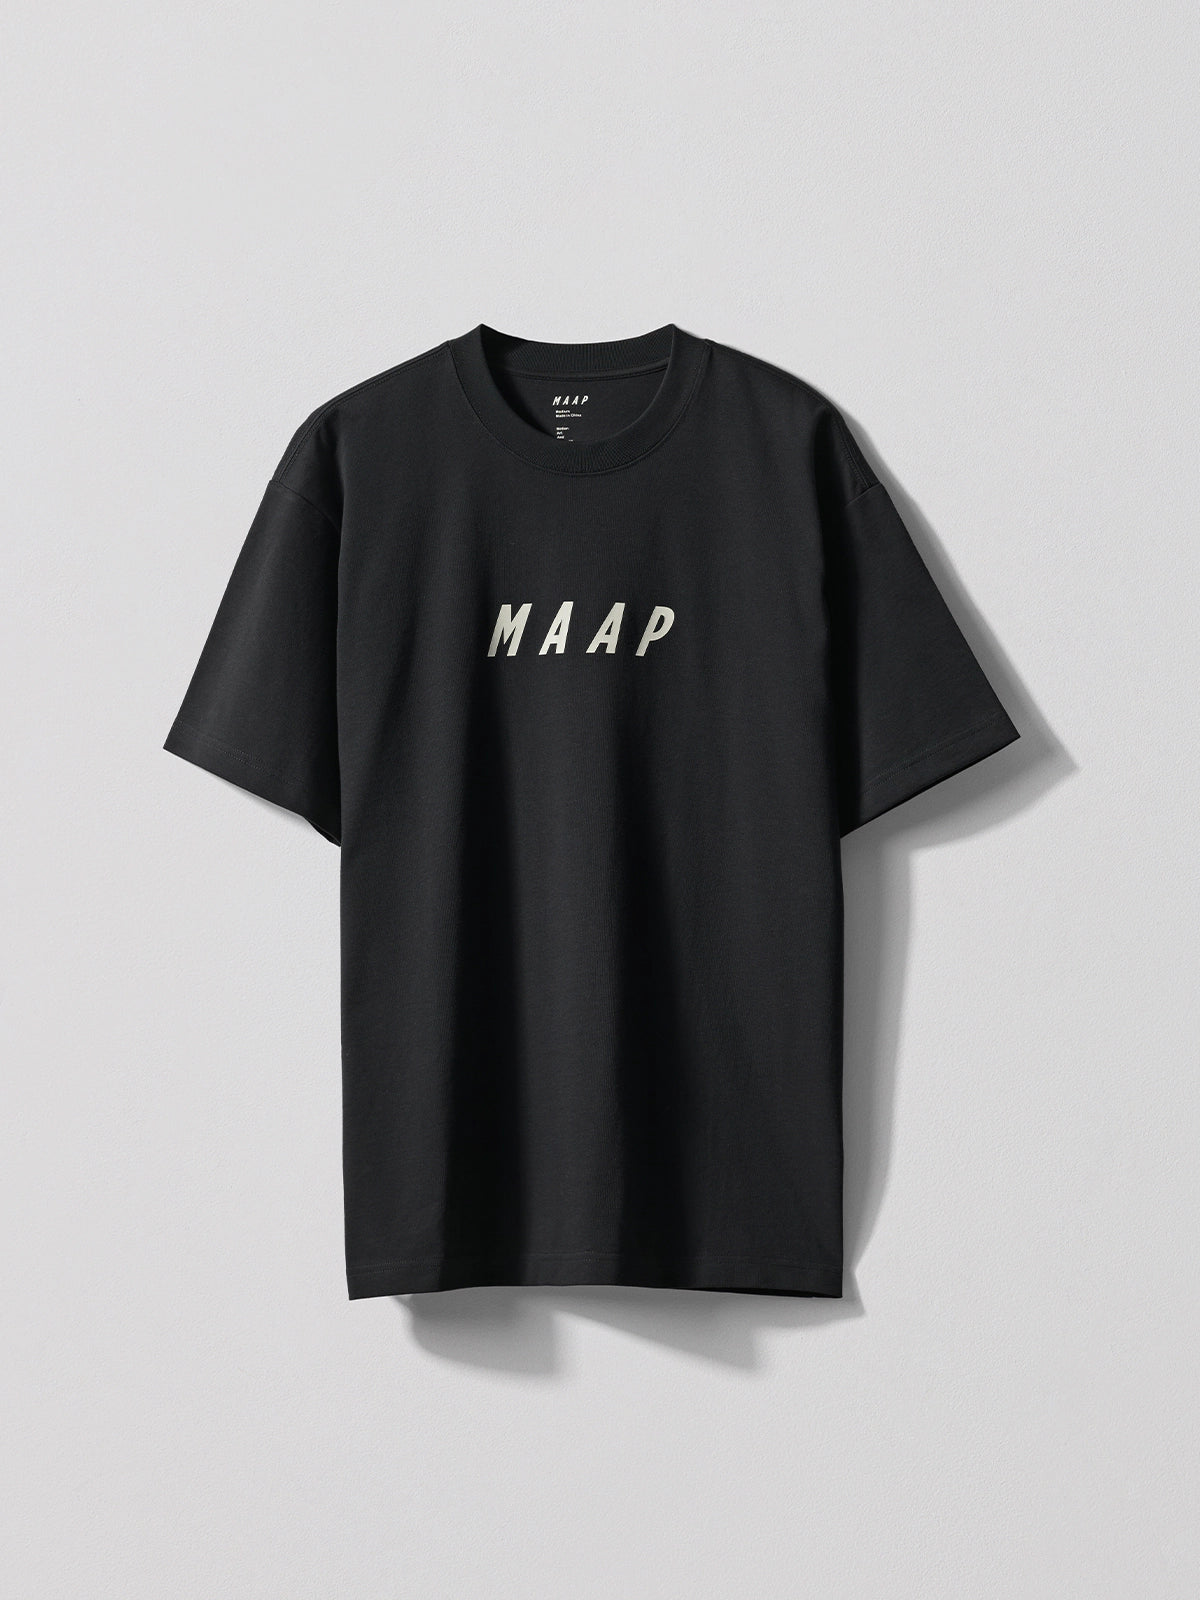 MAAP Lifeplus-Wahoo Replica Tシャツ | CYCLISM